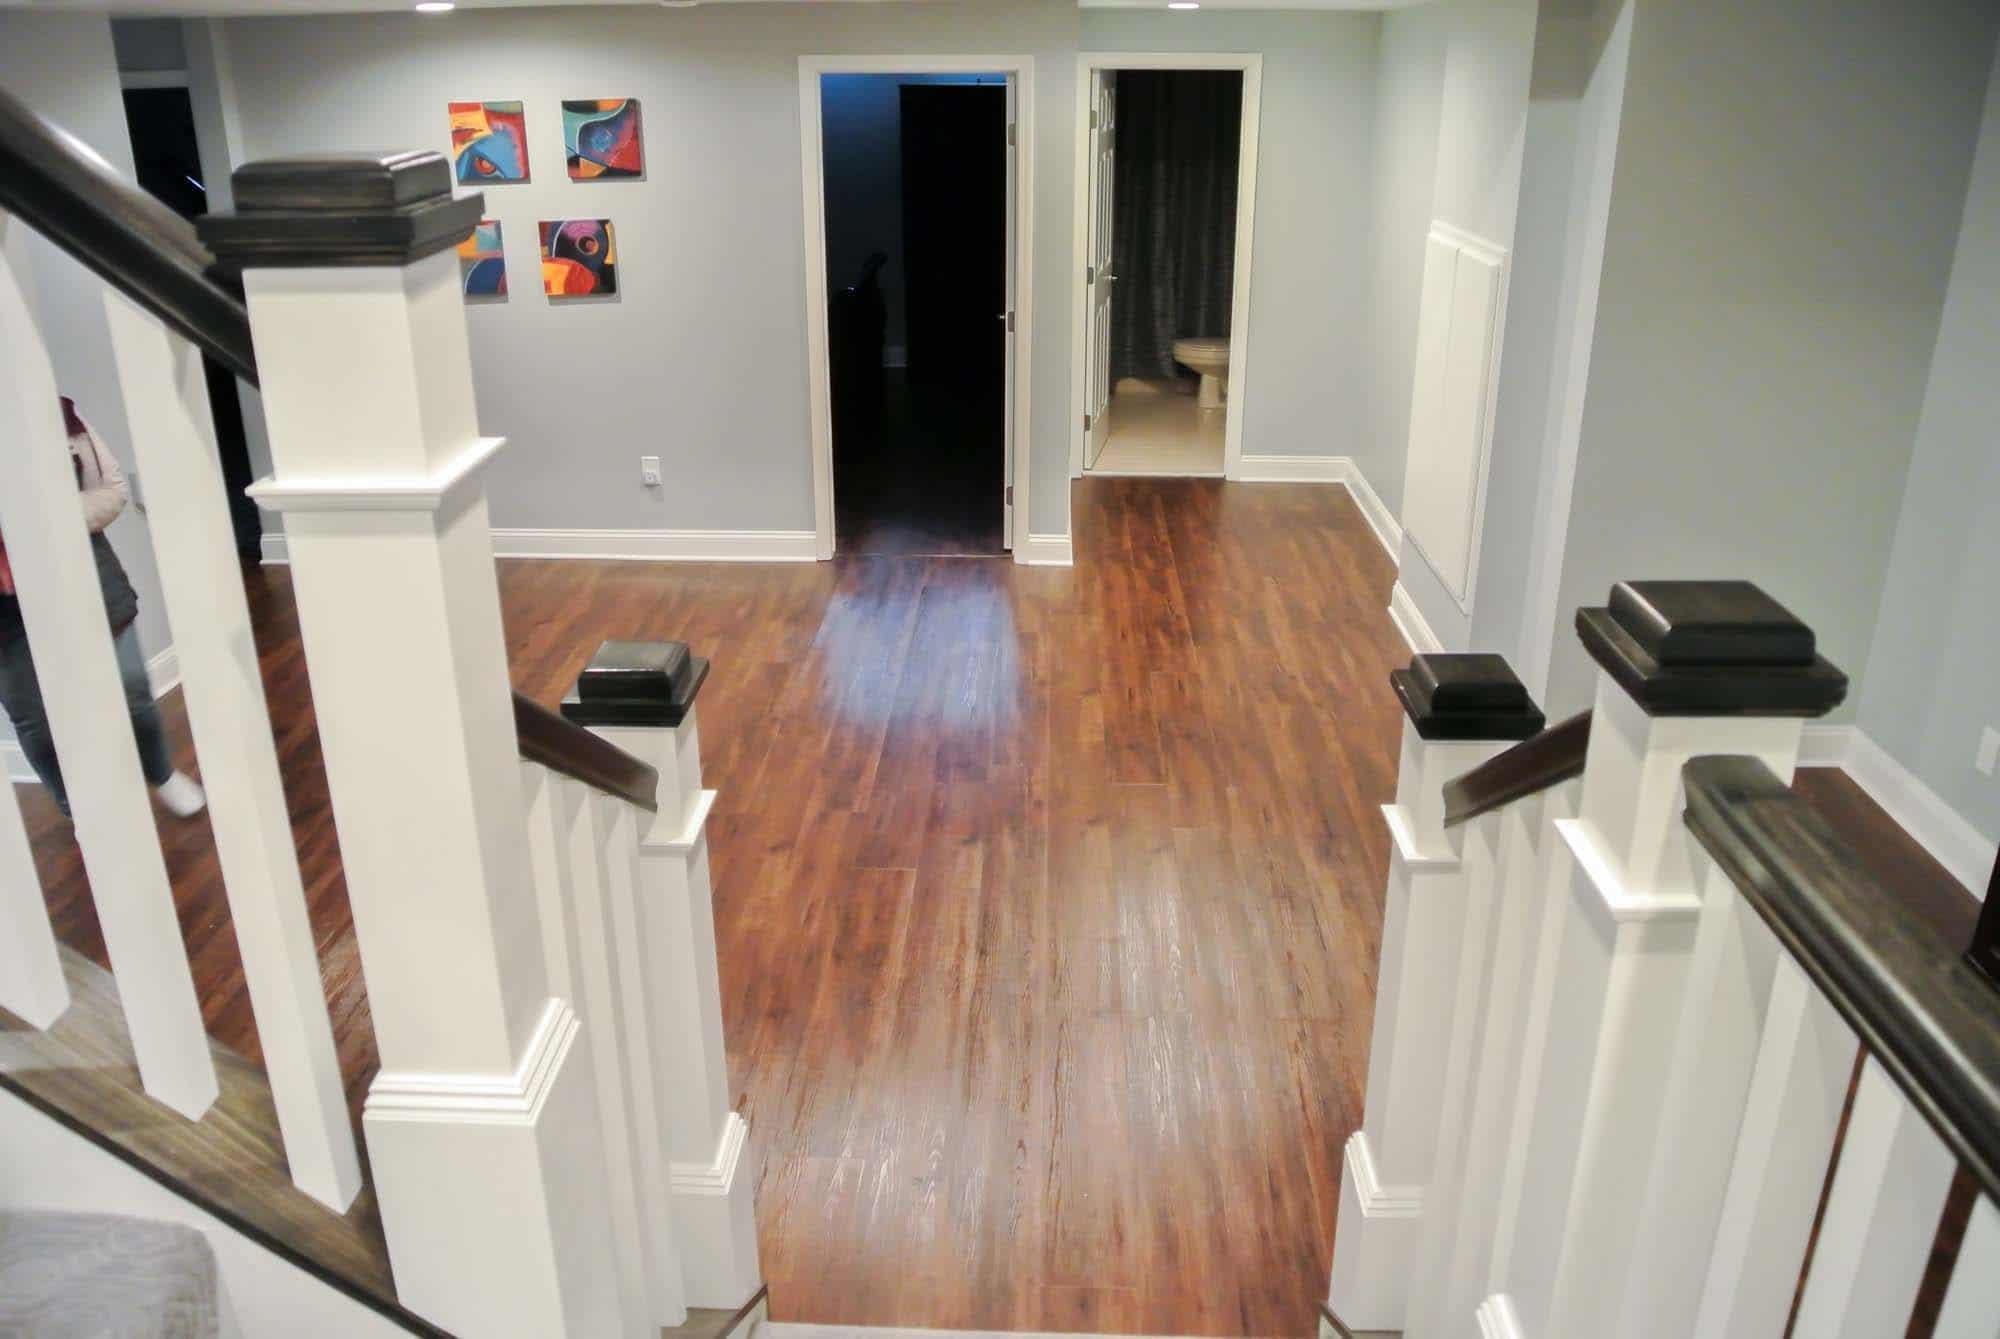 Brand new hardwood floors